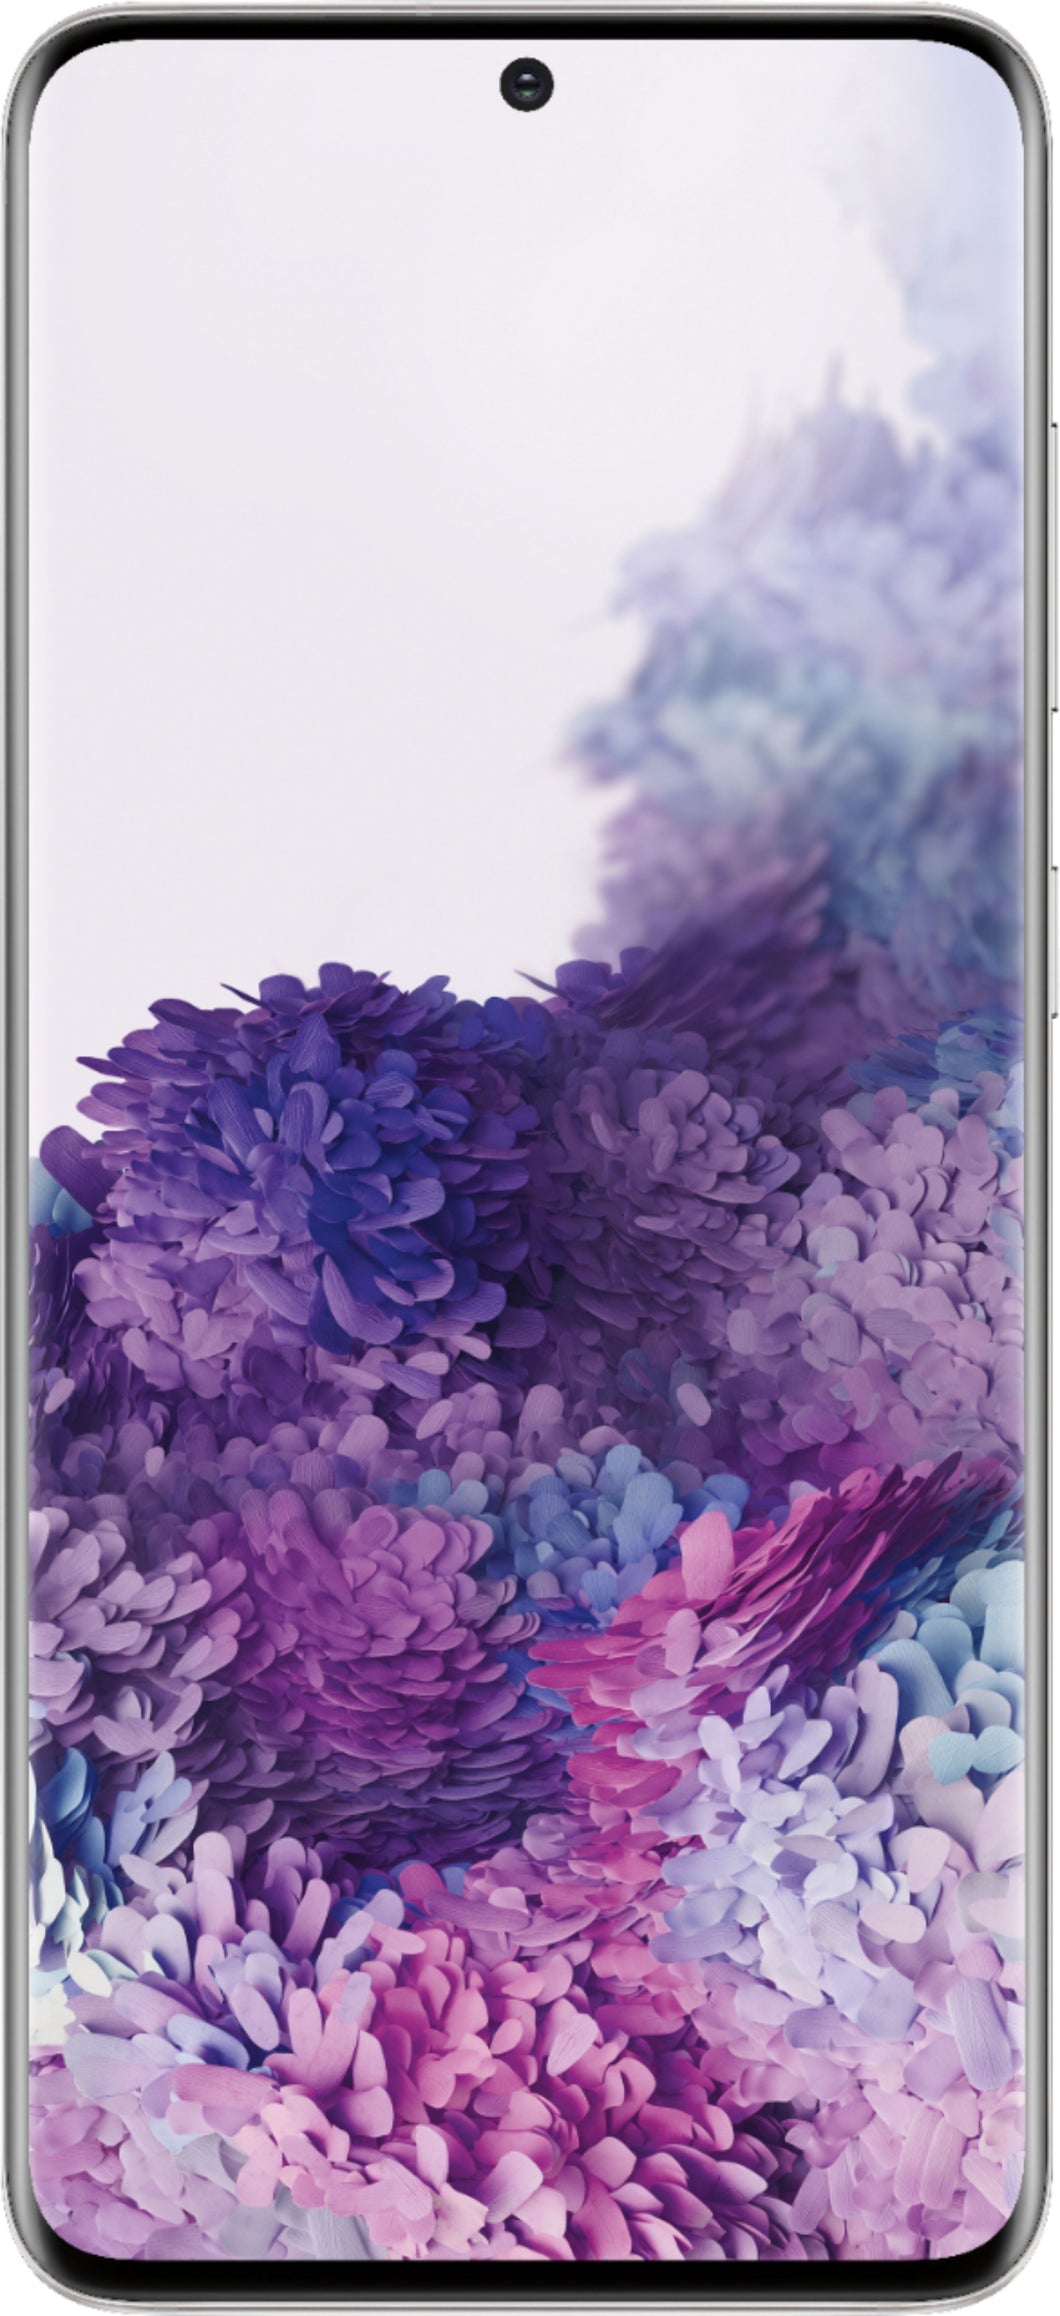 Samsung Galaxy S20+ 5G WHITE 128gb Consumer Celular locked